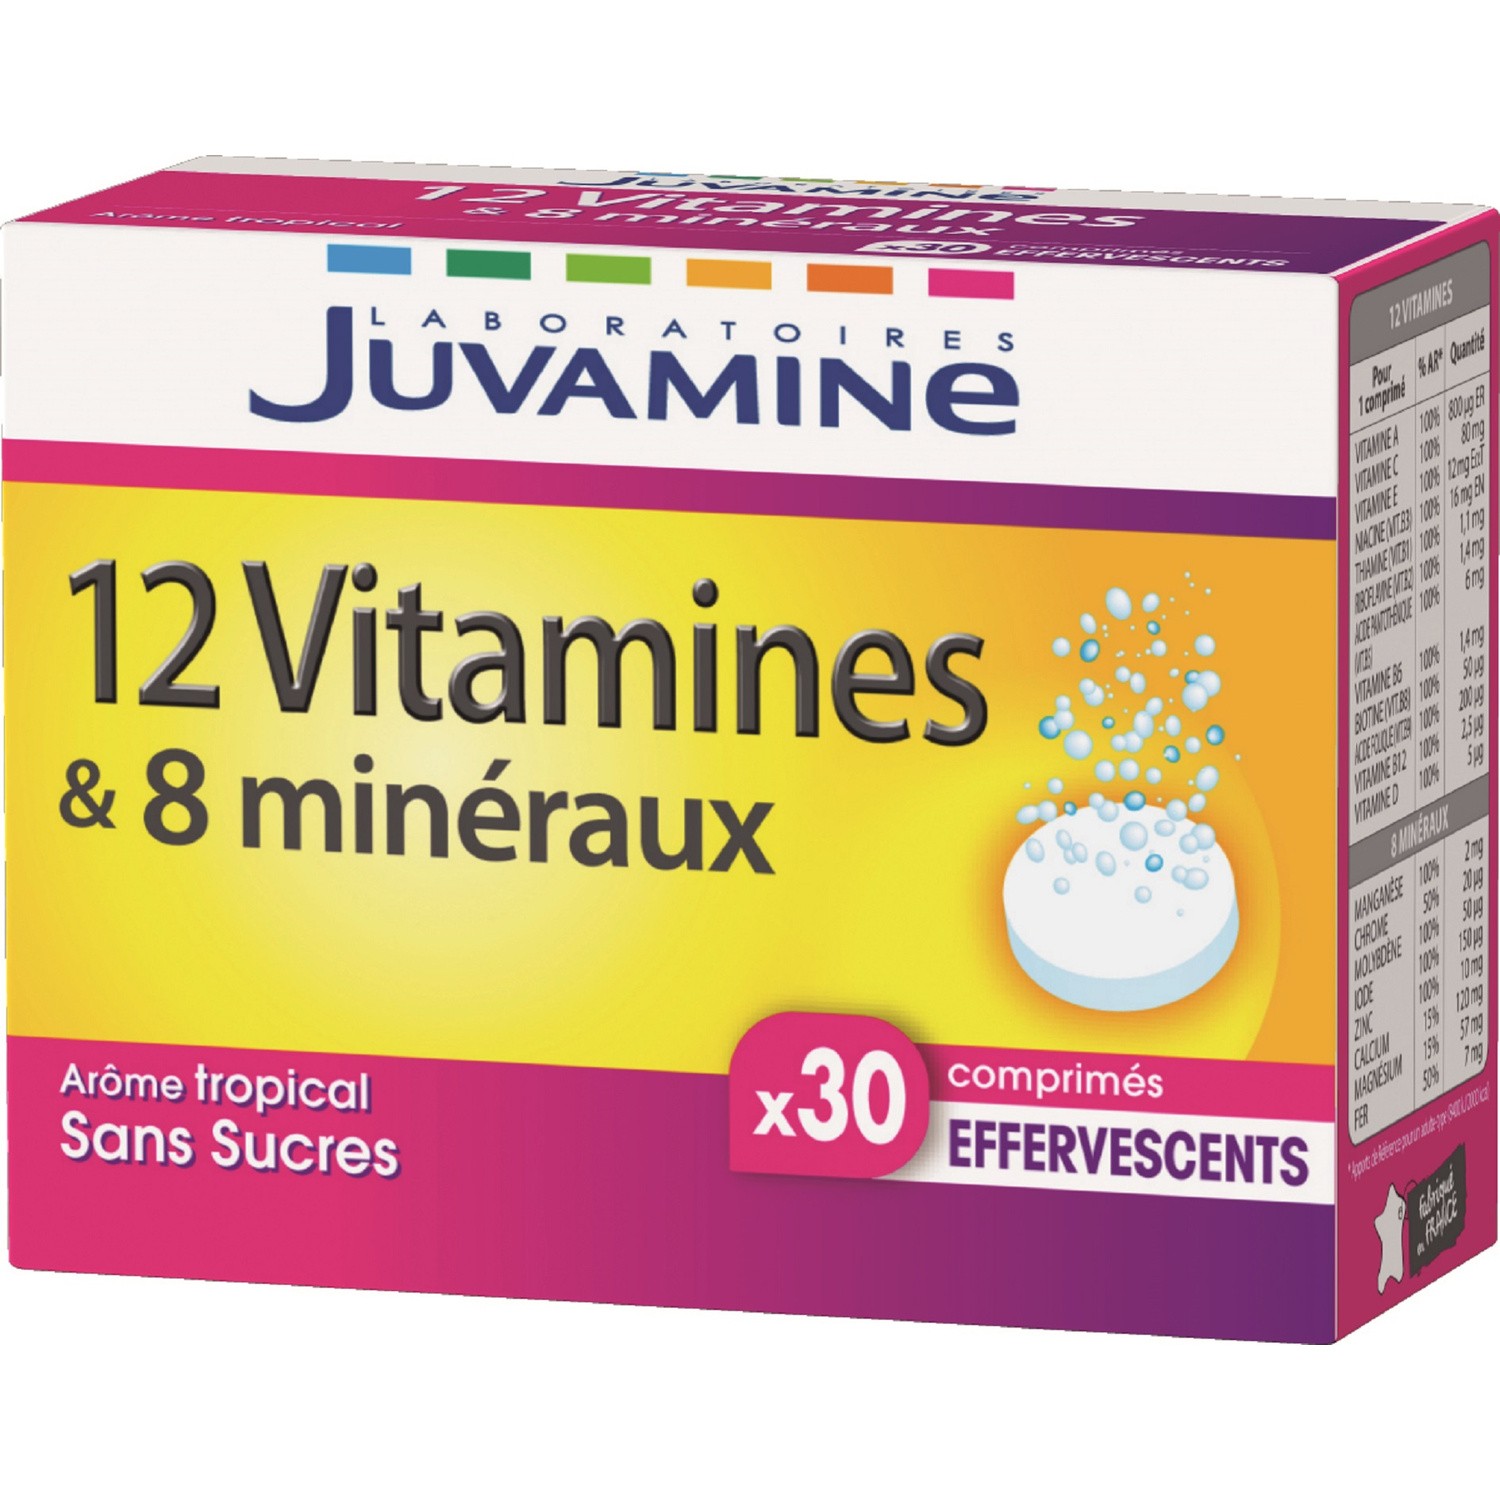 12 vitamines/8 minéraux